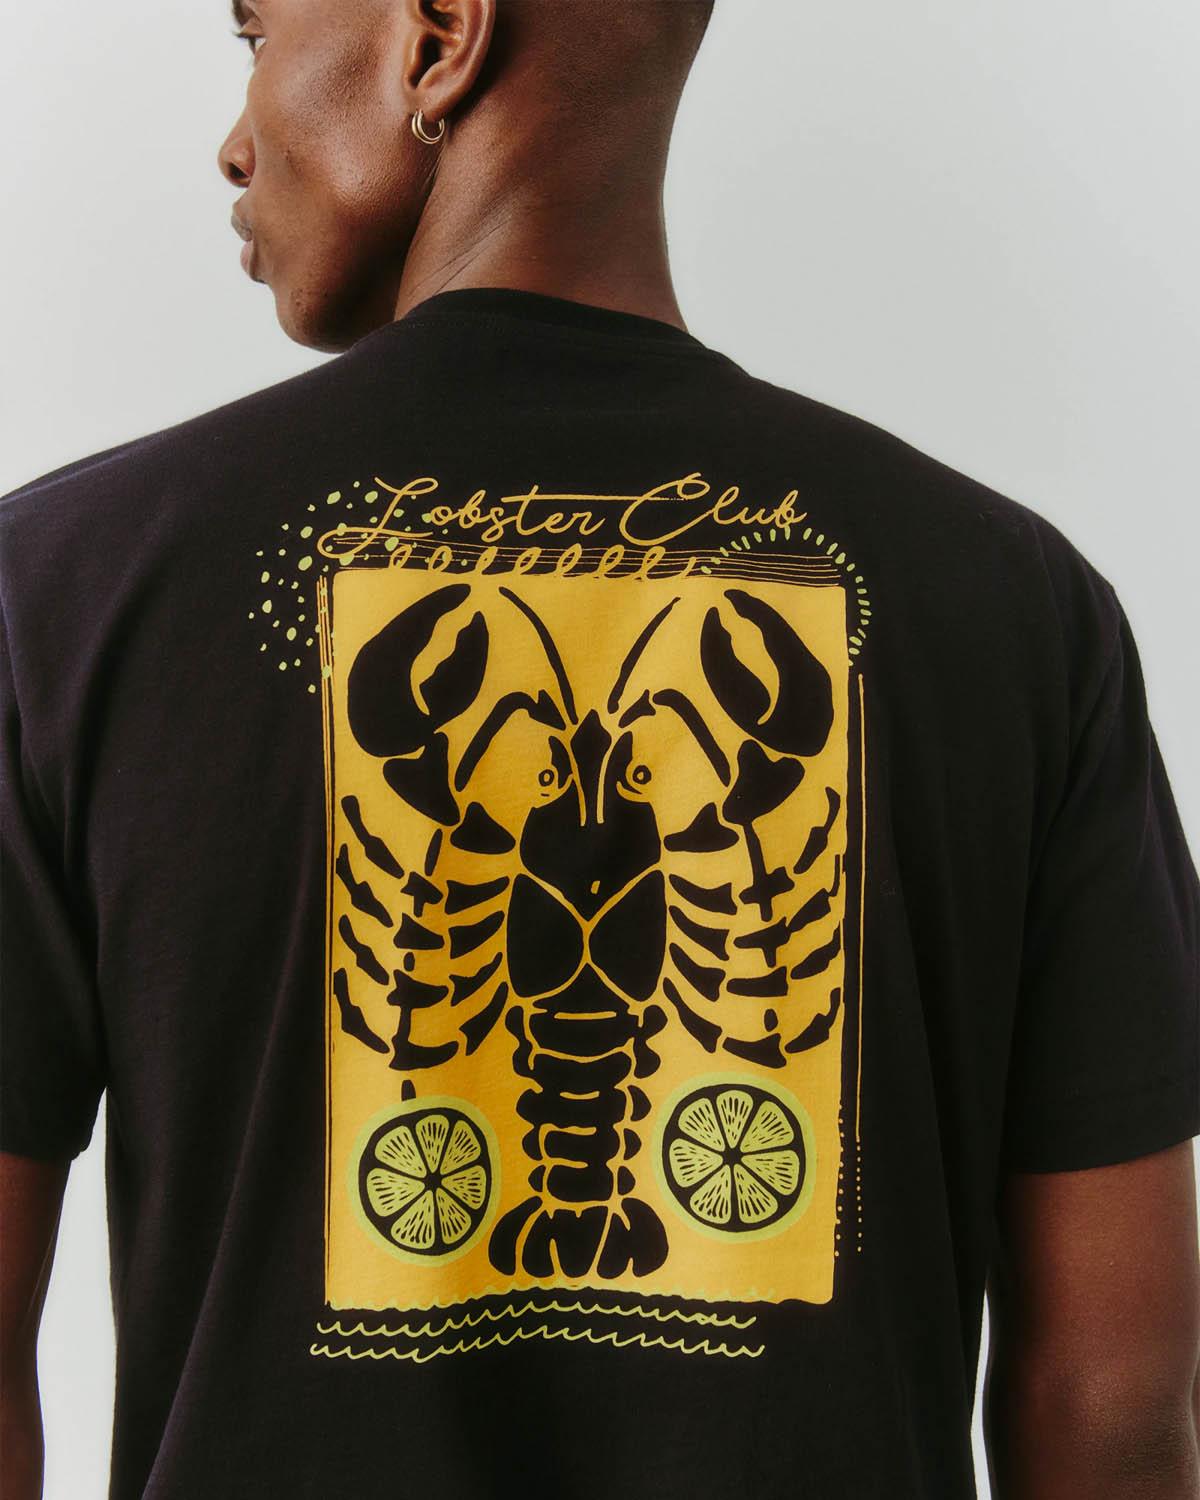 Beat Lobster Lemon T-shirt - Libertine-Libertine - Kul og Koks